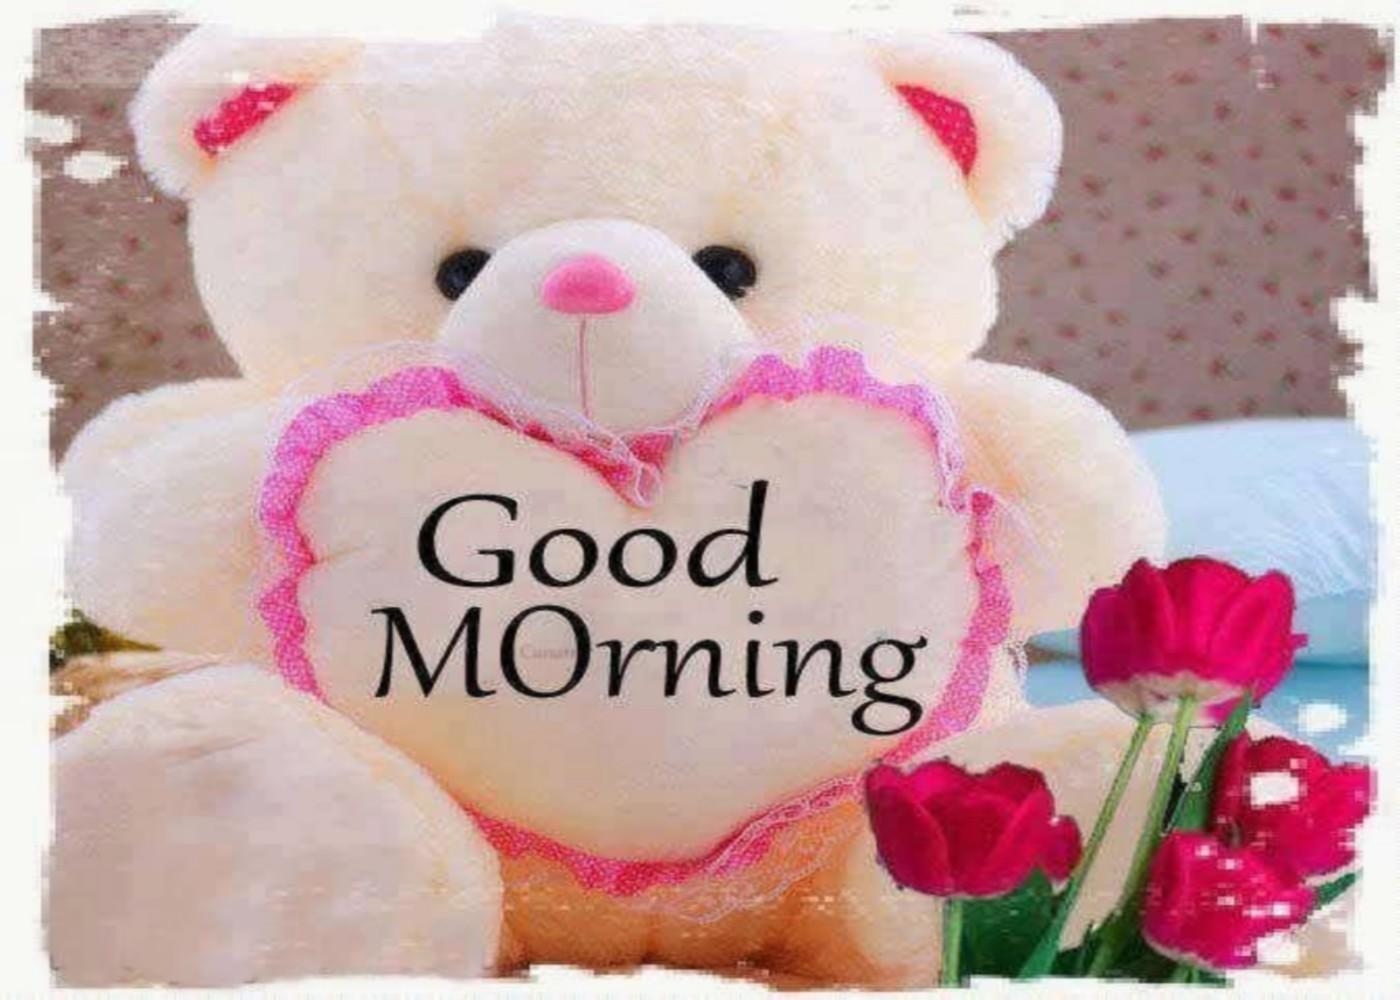 Good morning class. Good morning. Good morning цветы. Good morning вацап. Открытка доброе утро принцесса.